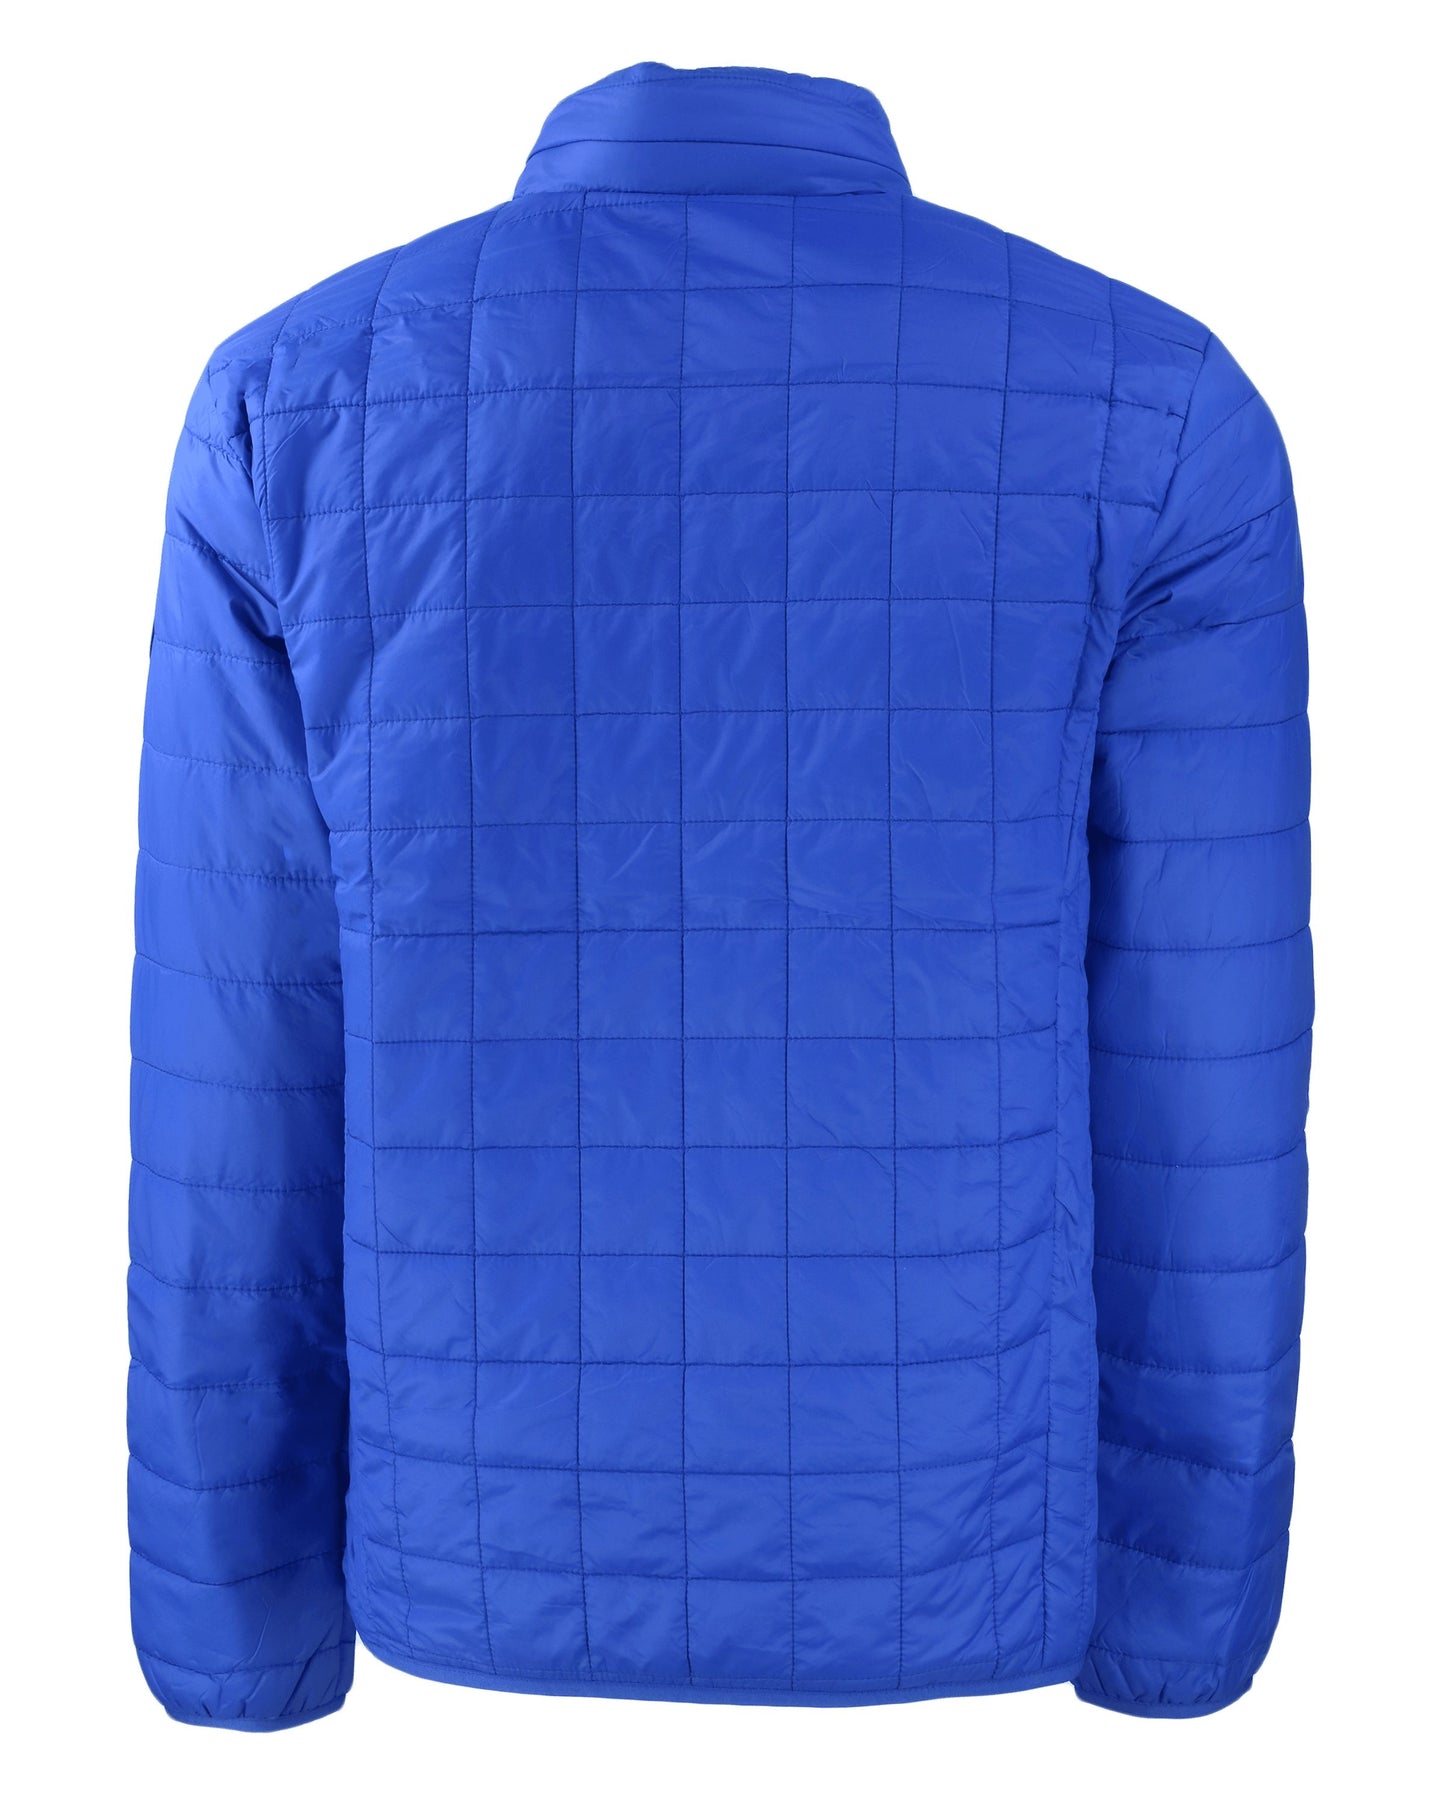 Cutter & Buck Rainier PrimaLoft Eco Insulated Puffer Jacket Royal Blue